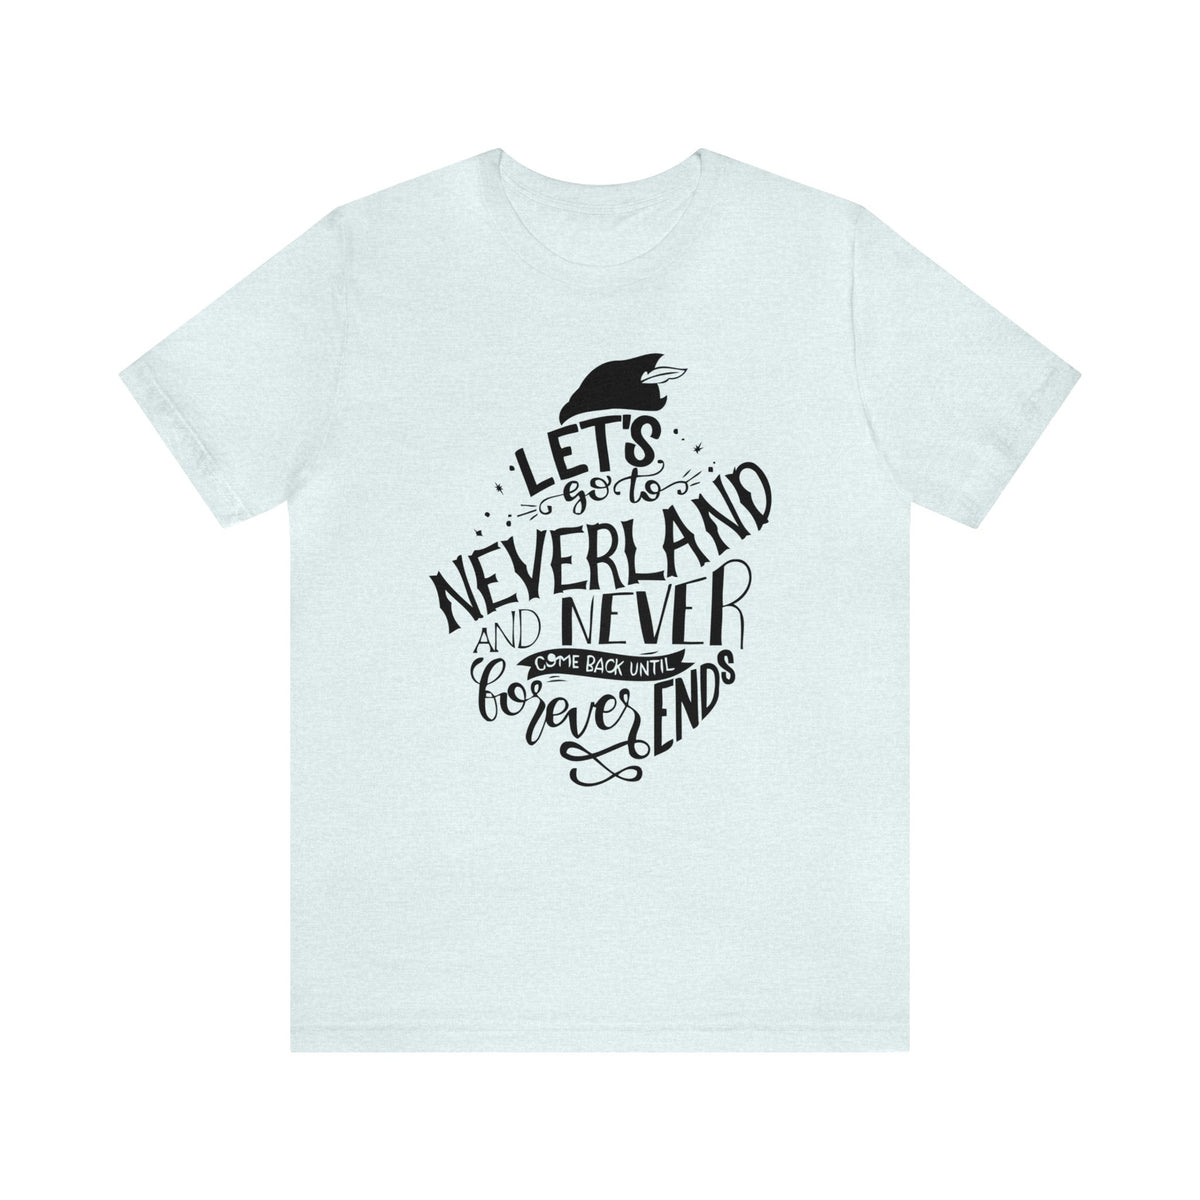 Neverland Bella Canvas Unisex Jersey Short Sleeve Tee